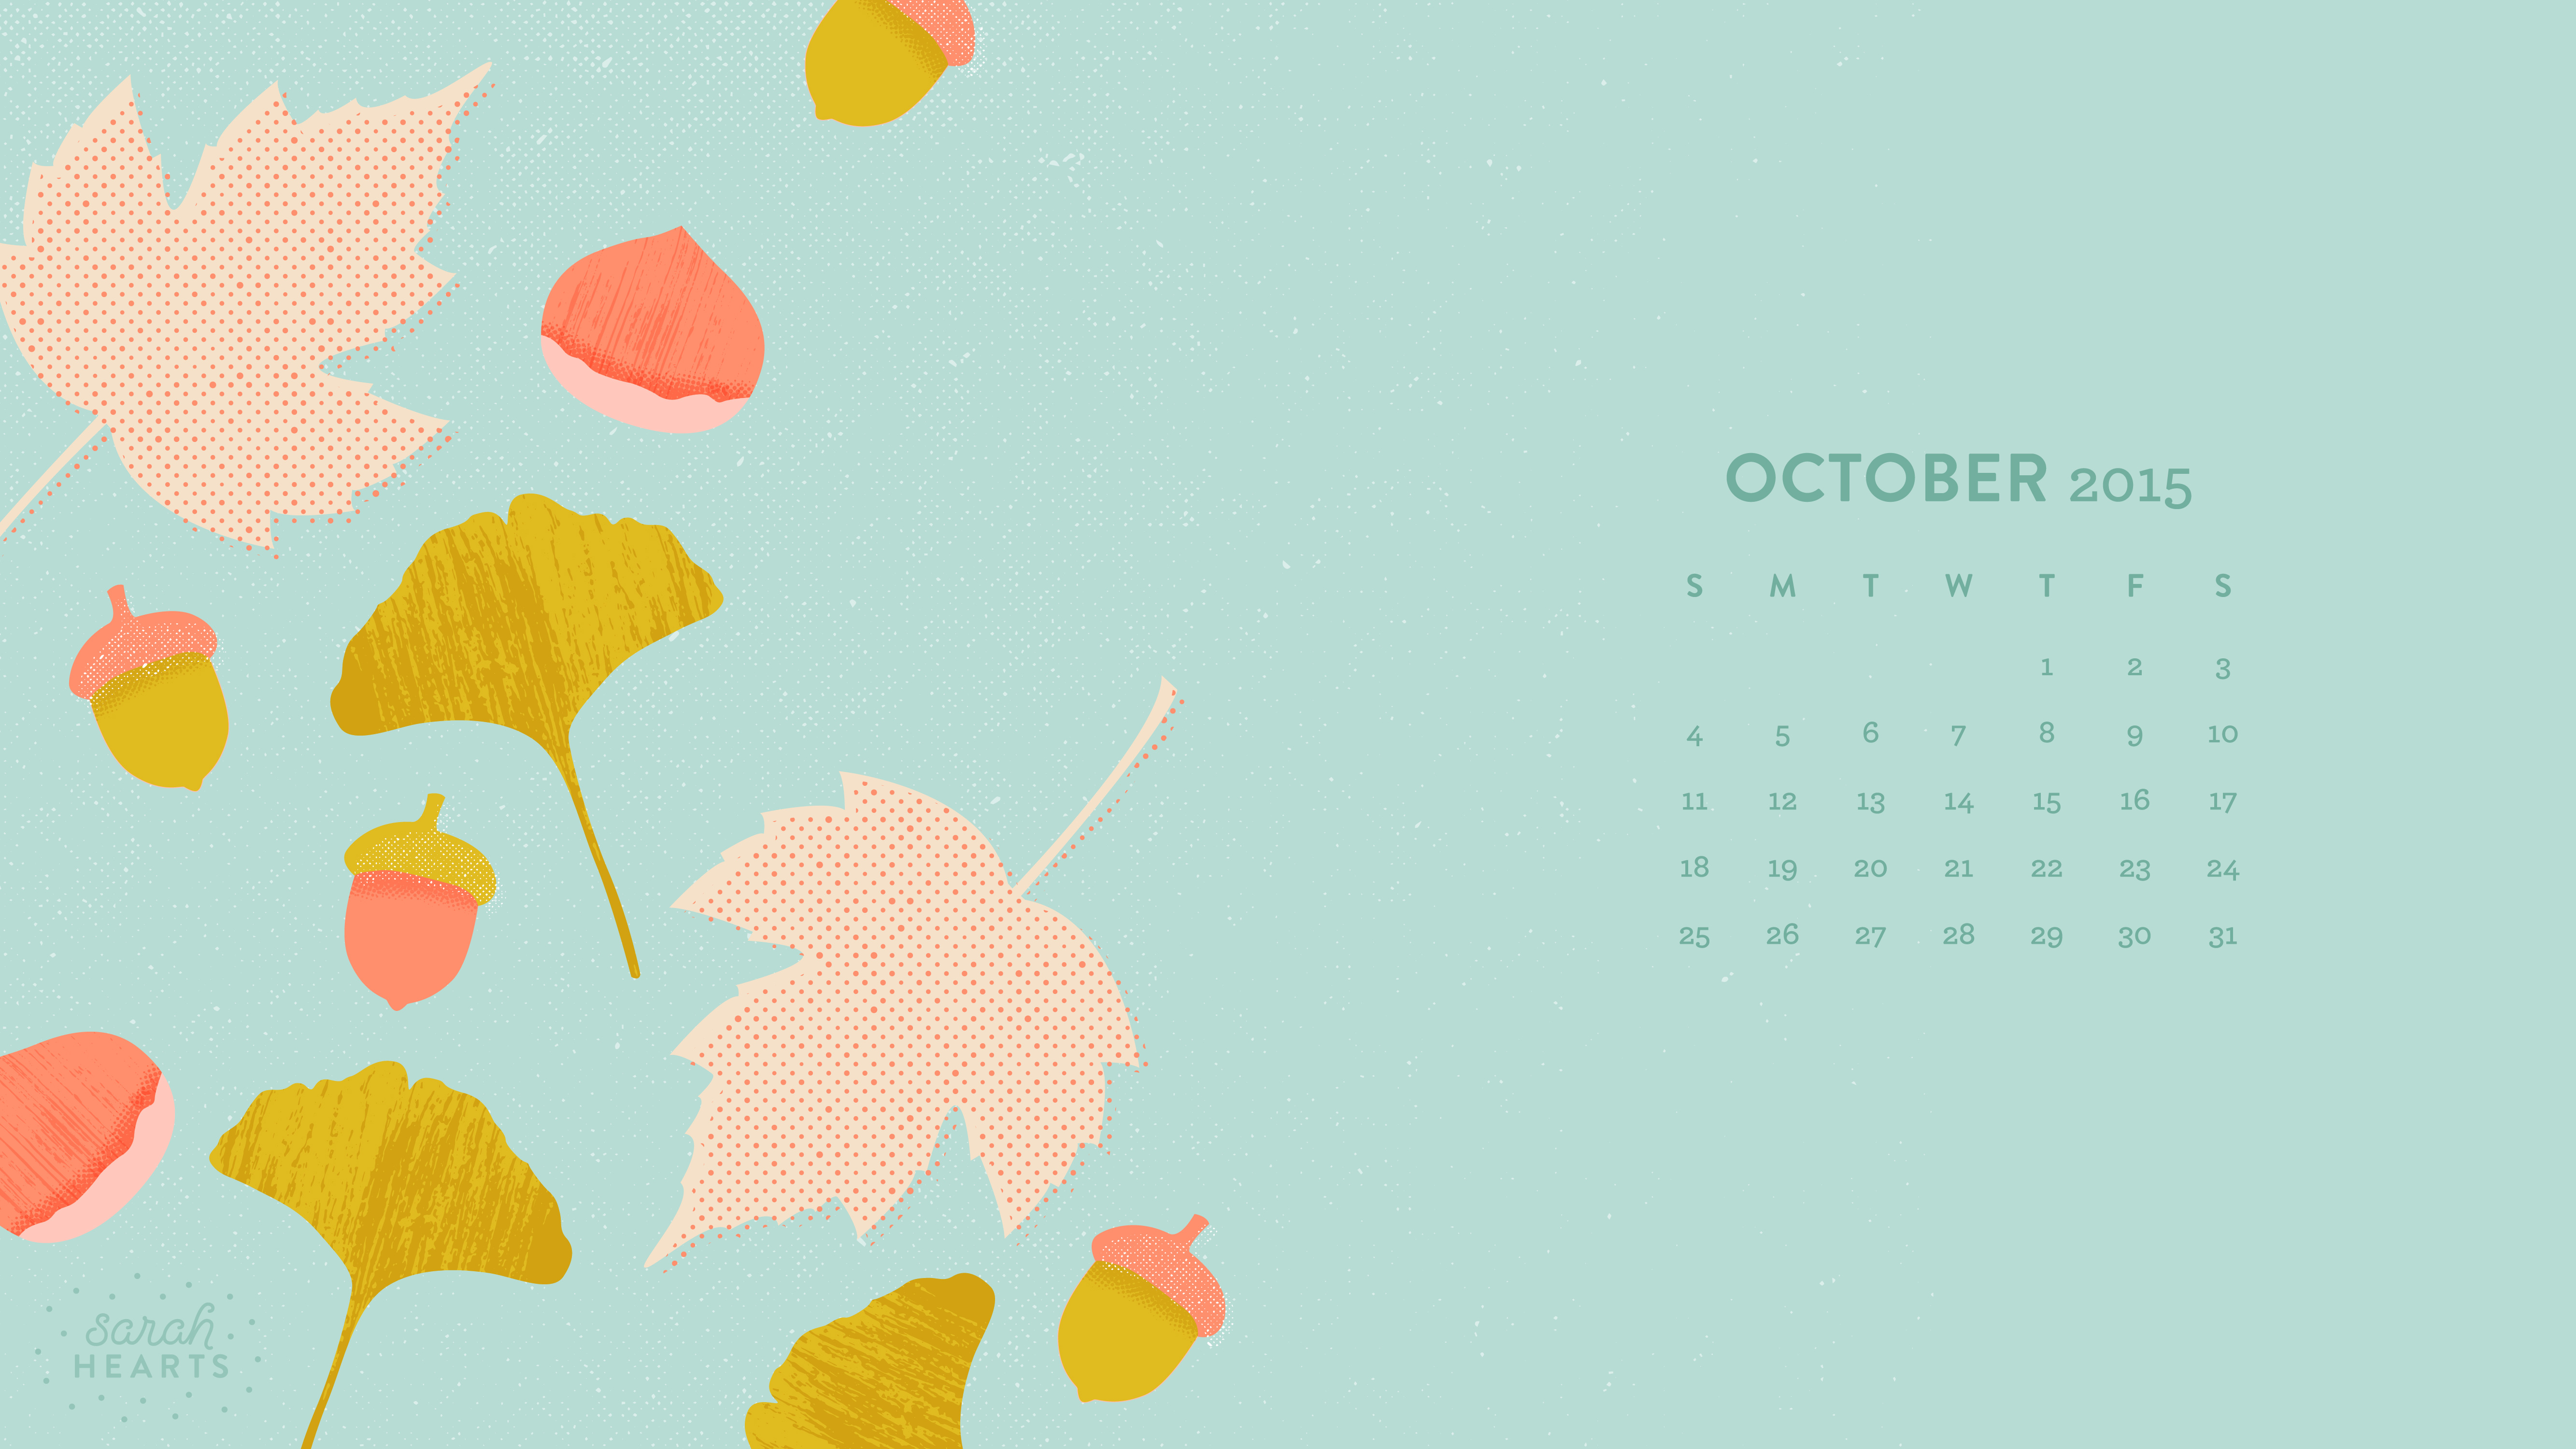 October 2015 Calendar Wallpaper Sarah Hearts